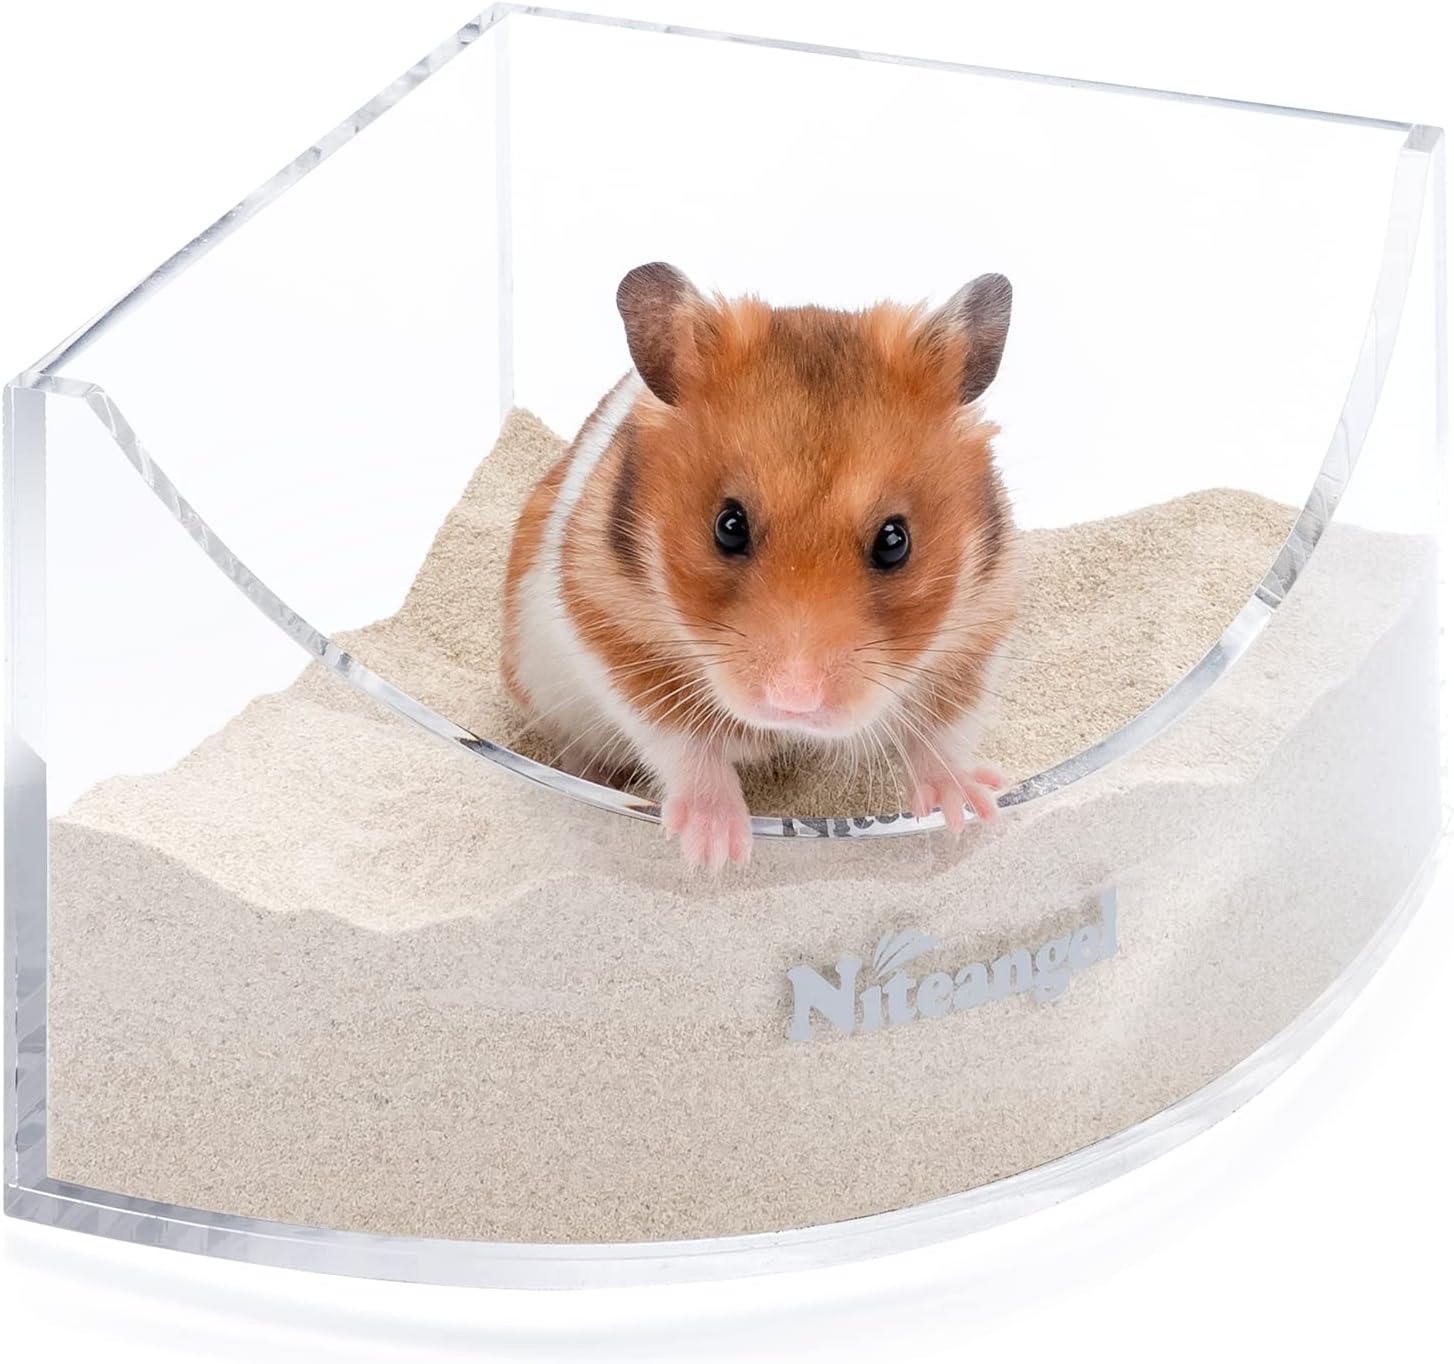 Hamster taking a sand bath